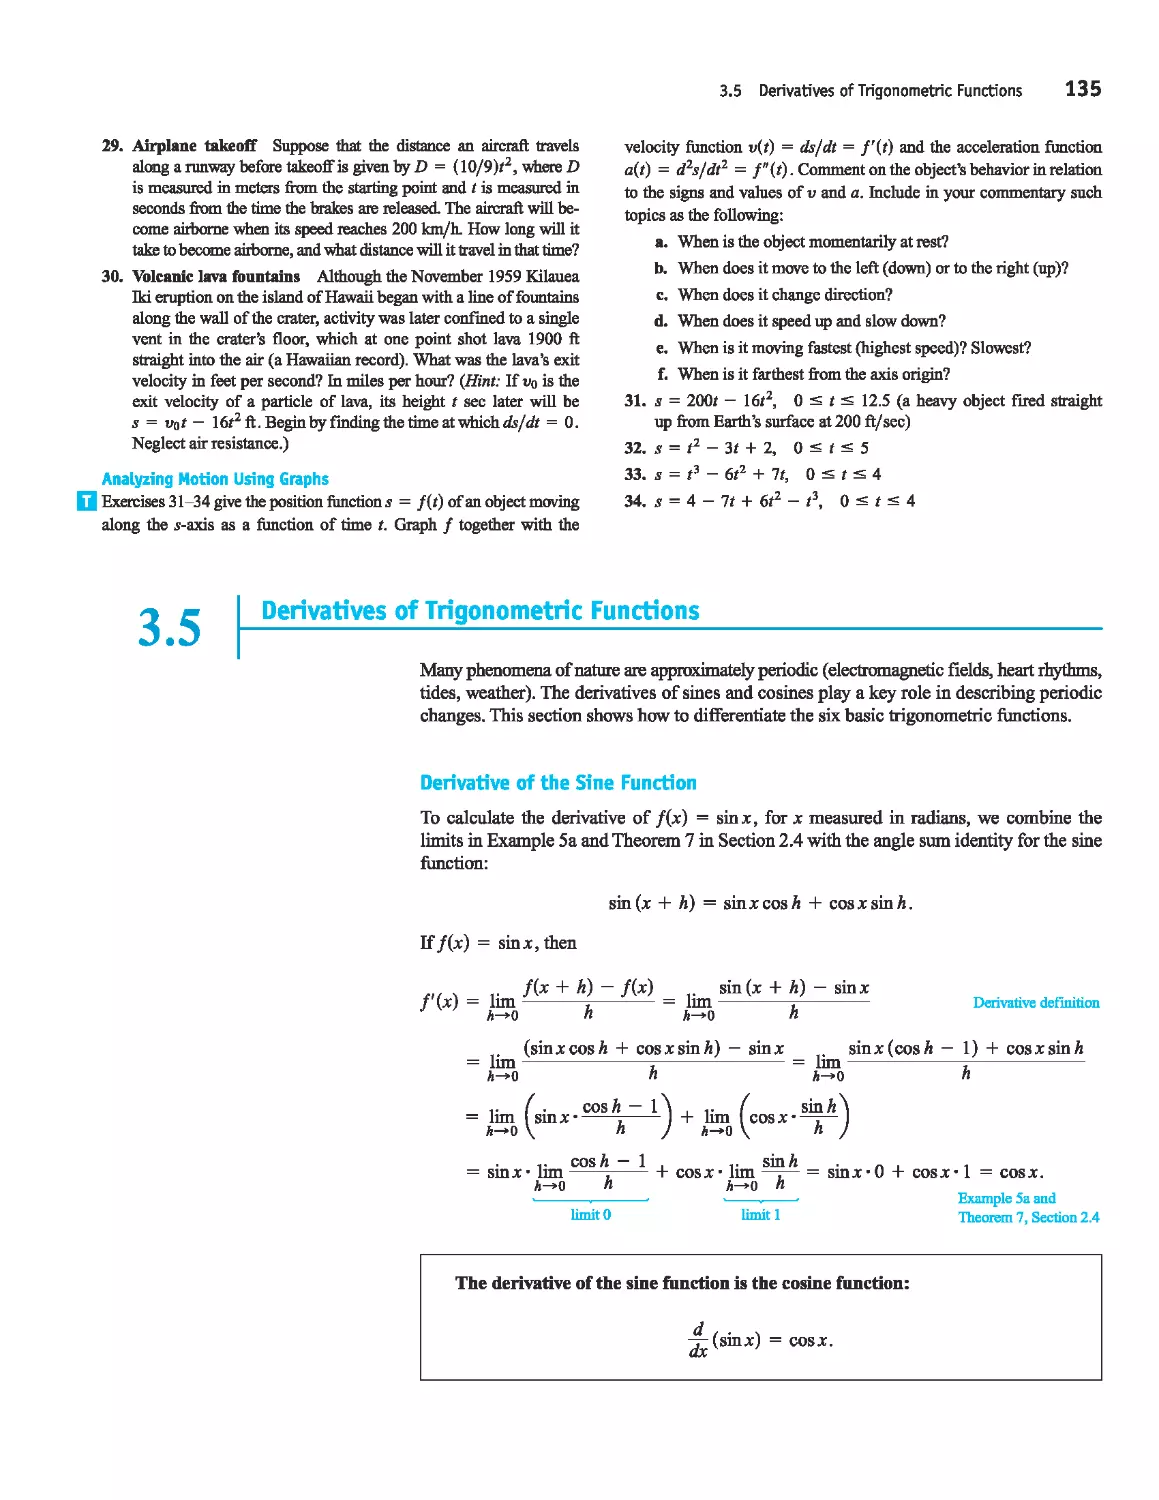 3.5 - Derivatives of Trigonometric Functions